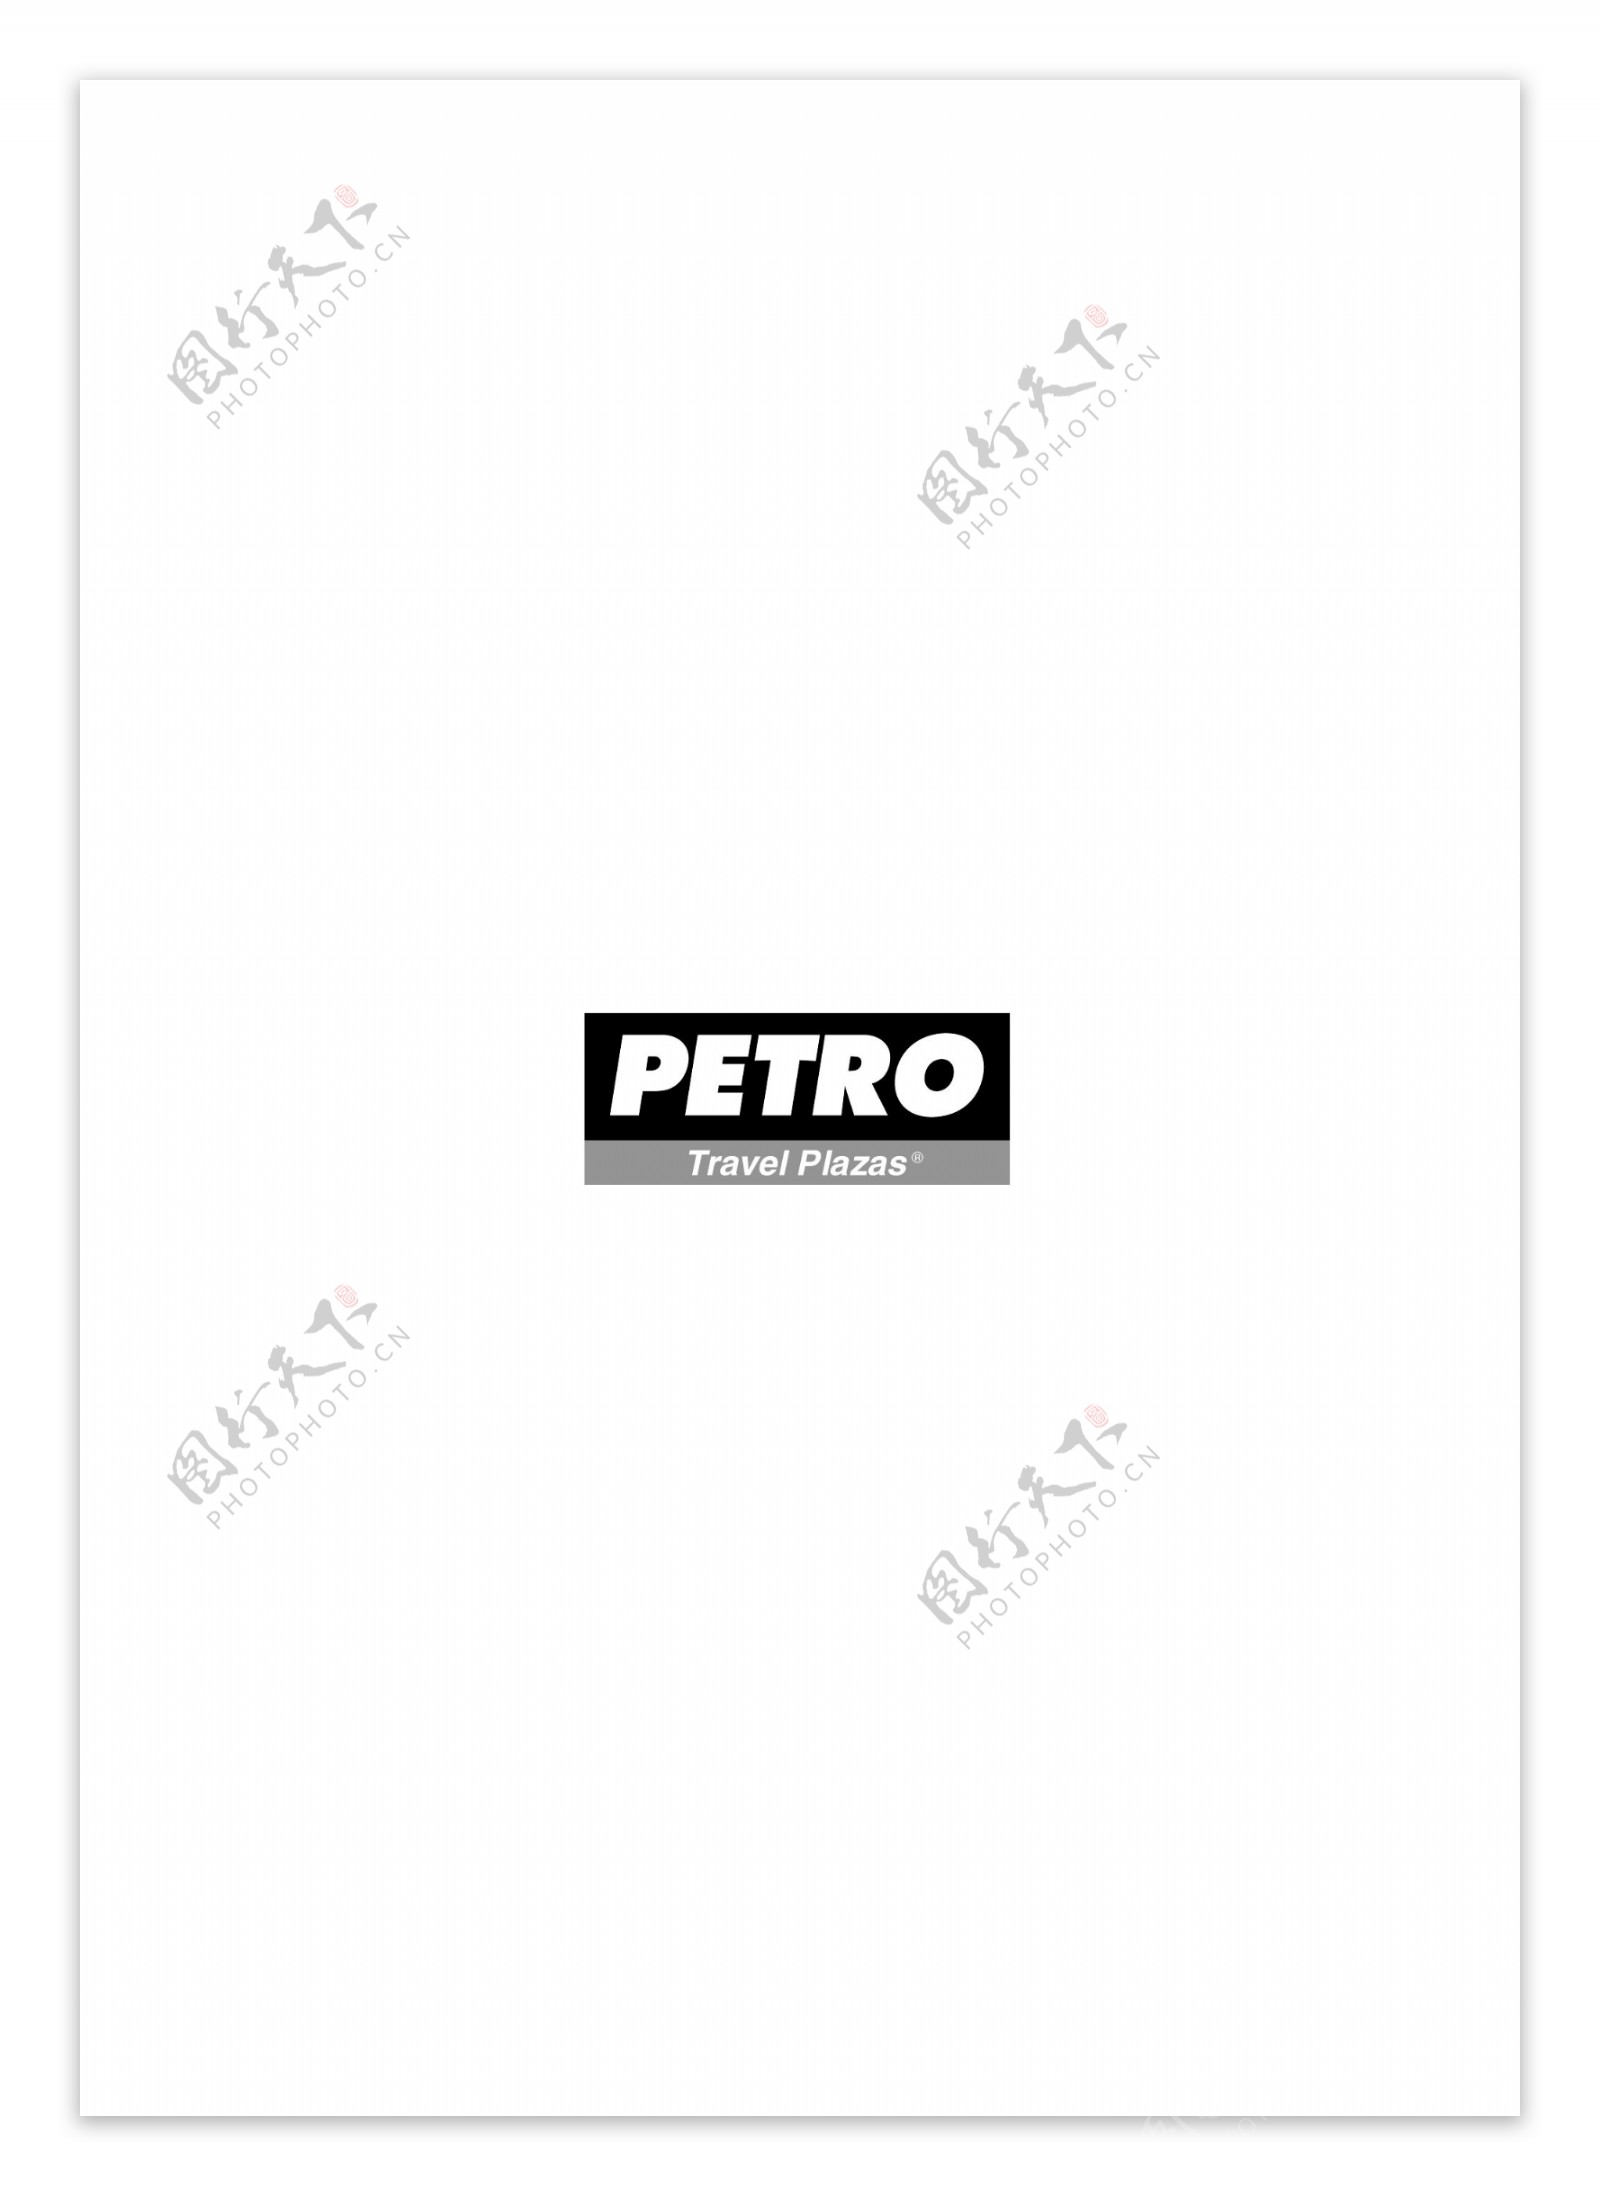 Petrologo设计欣赏Petro旅游网站标志下载标志设计欣赏